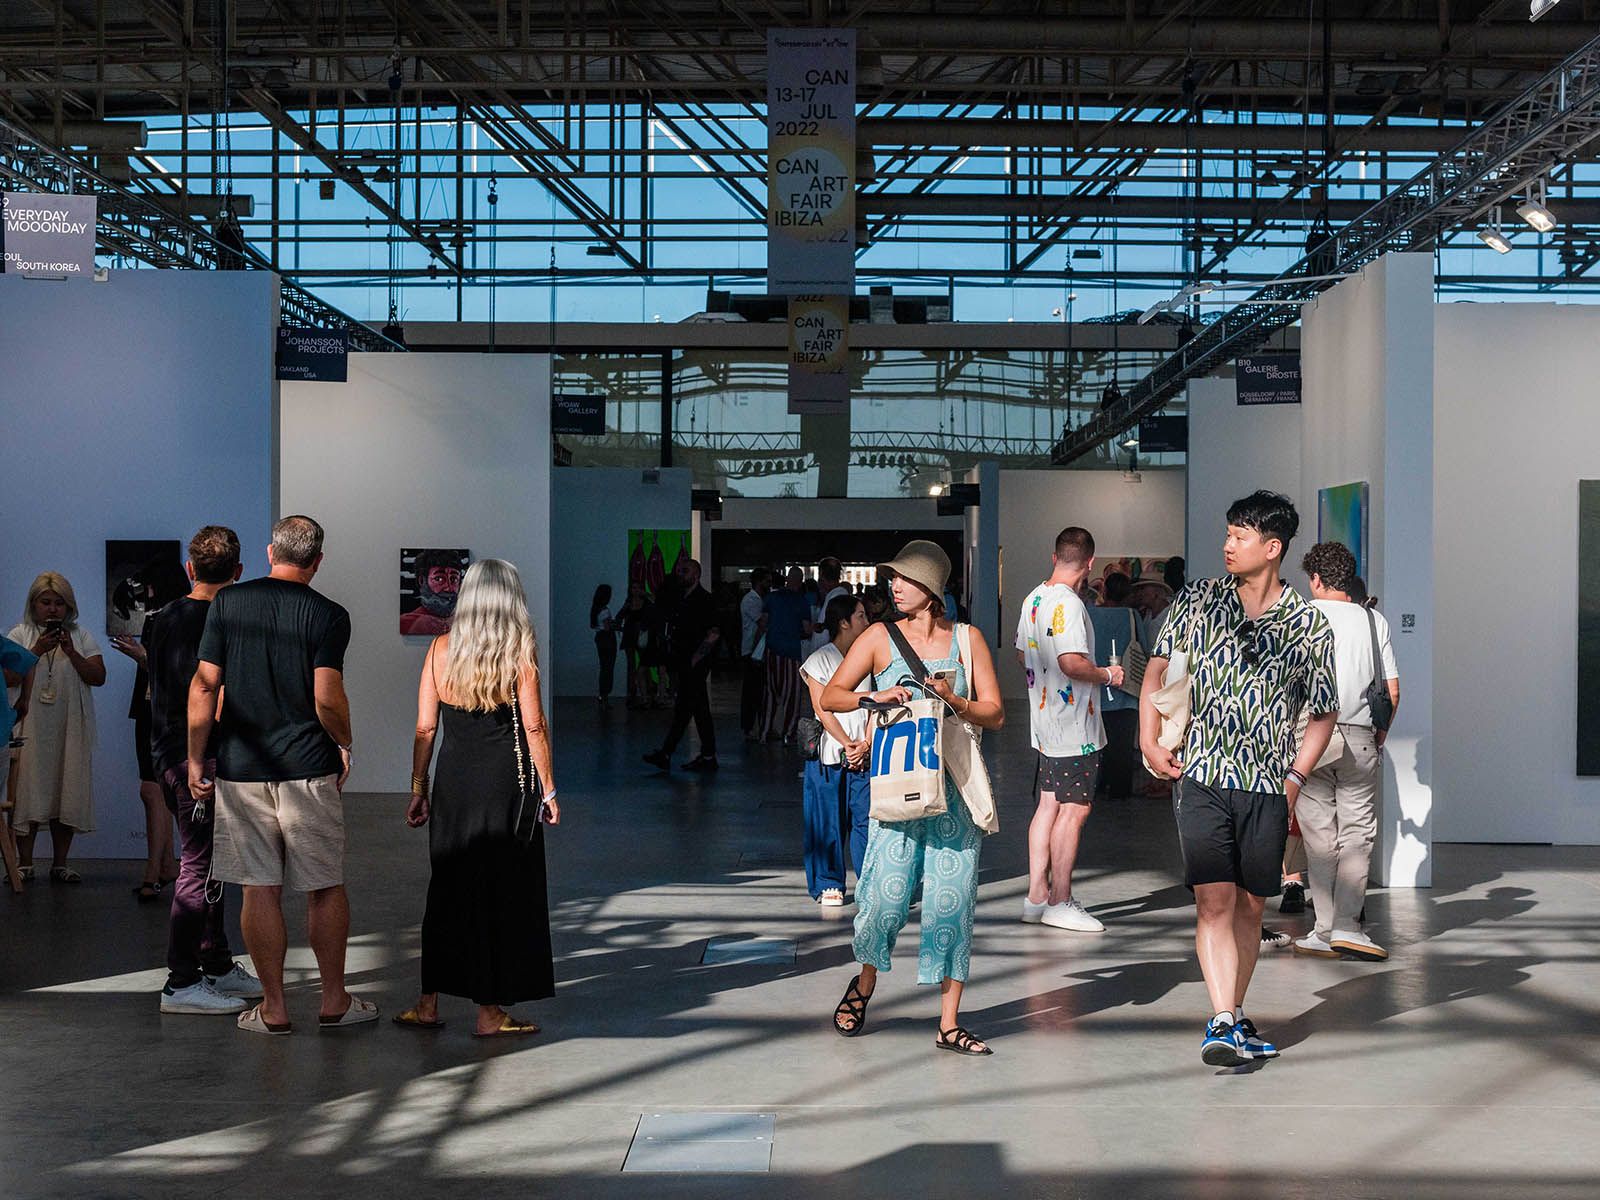 CAN Art Fair Ibiza, the summer art event, is back